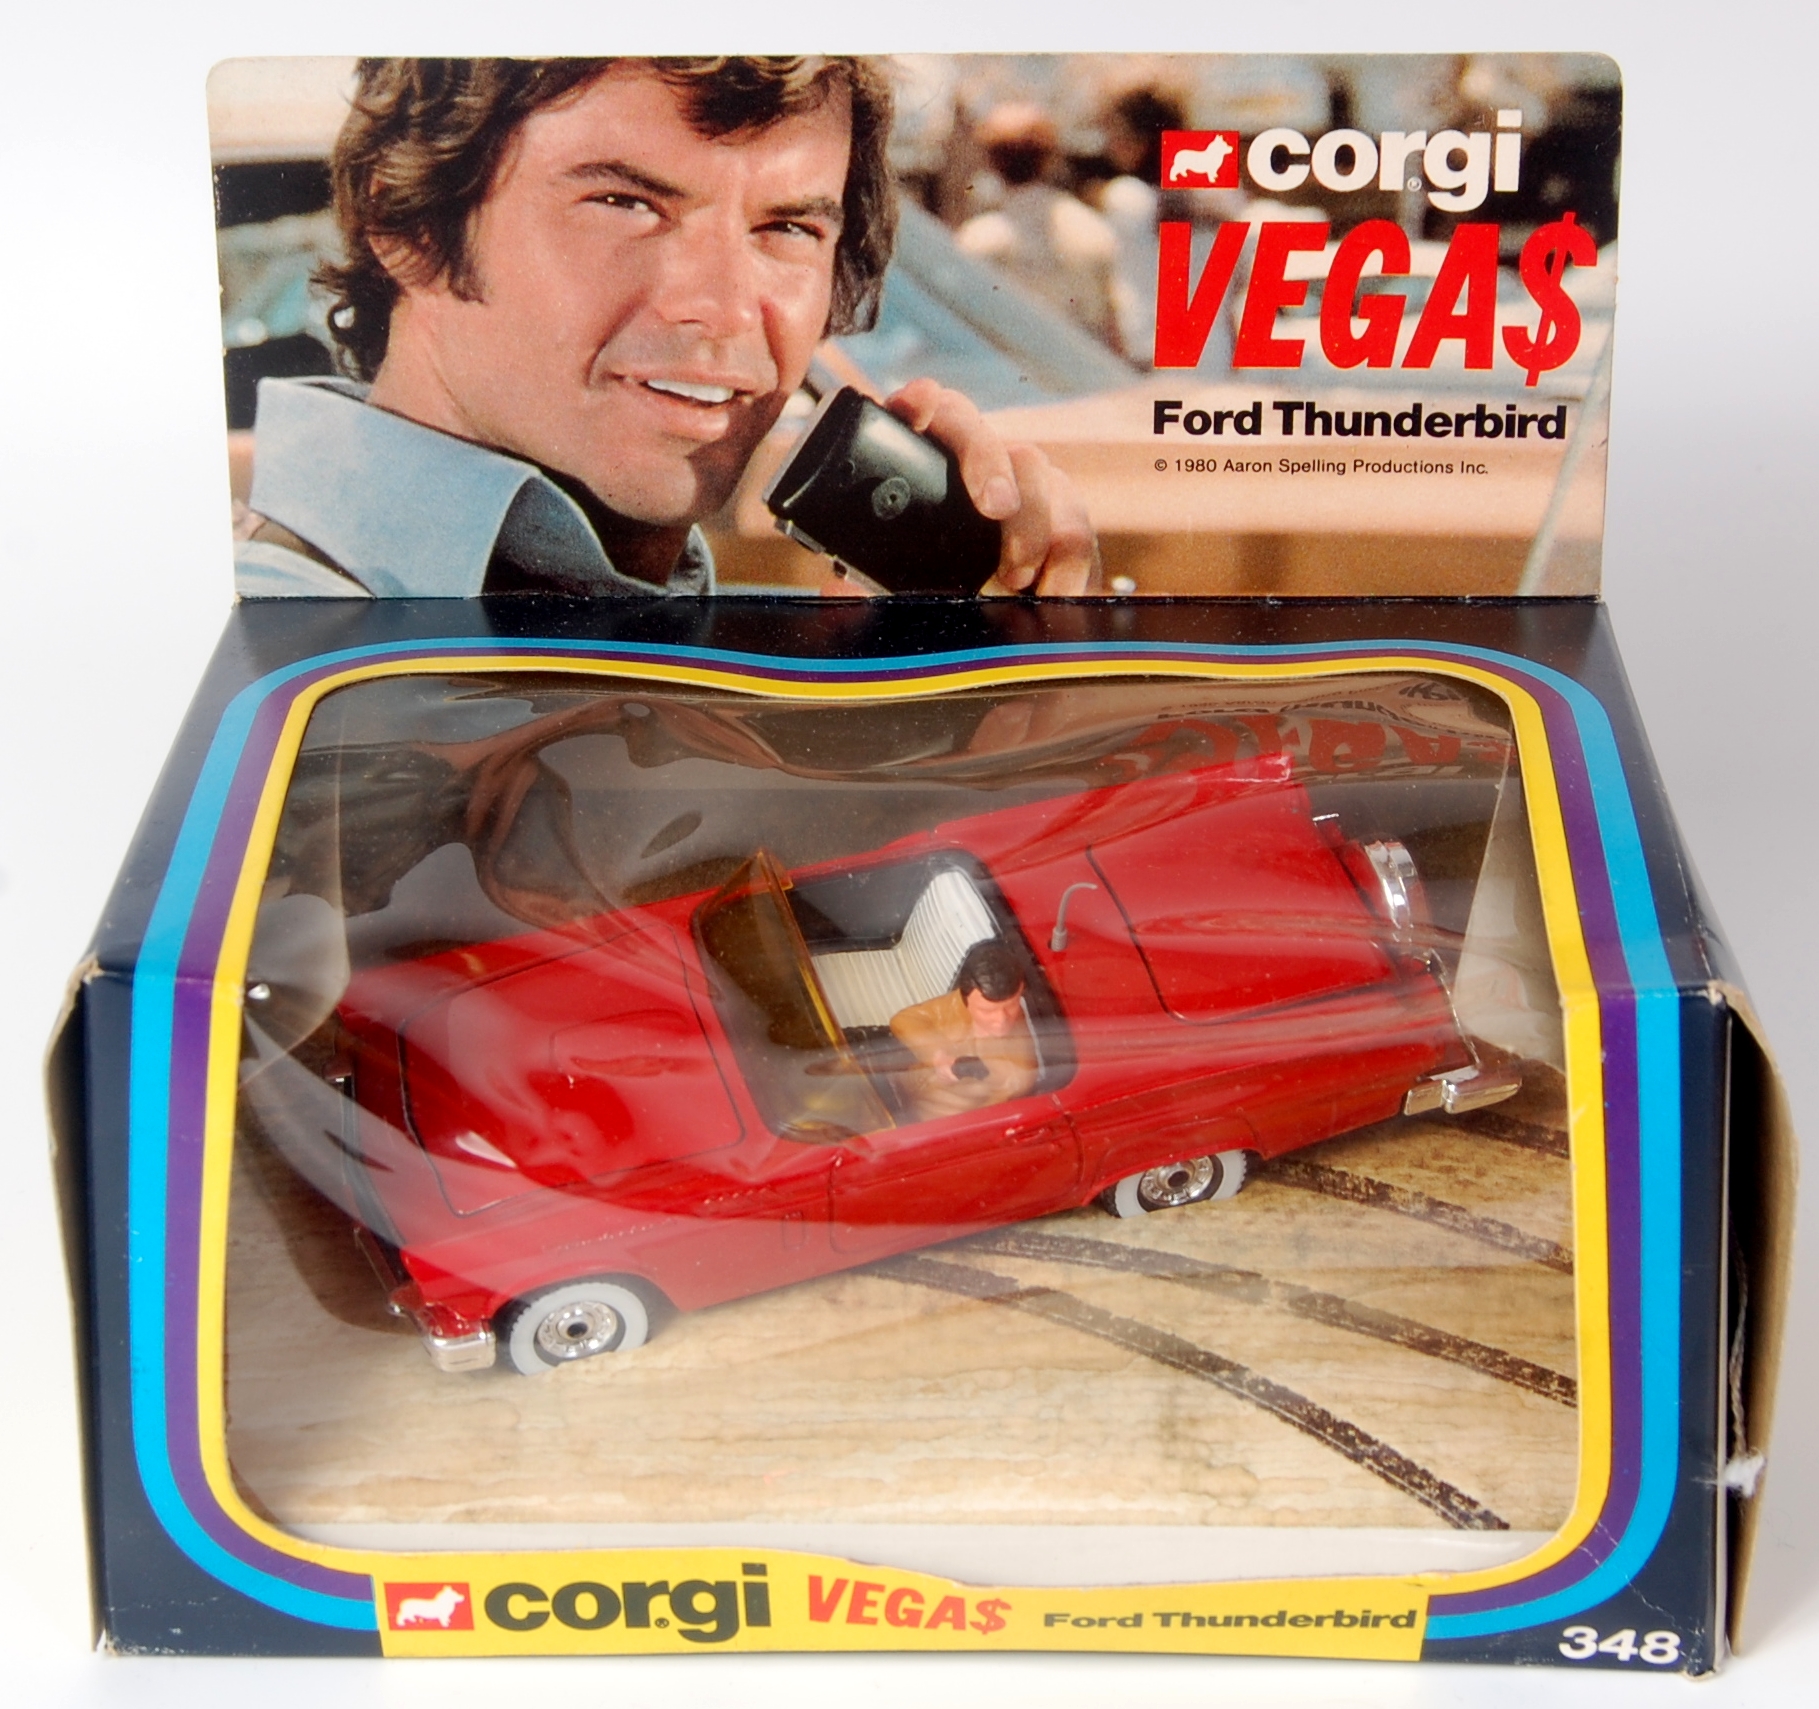 Corgi Toys, 348, Vegas Thunderbird, red body with black and white interior, Dan Tanner figure, in